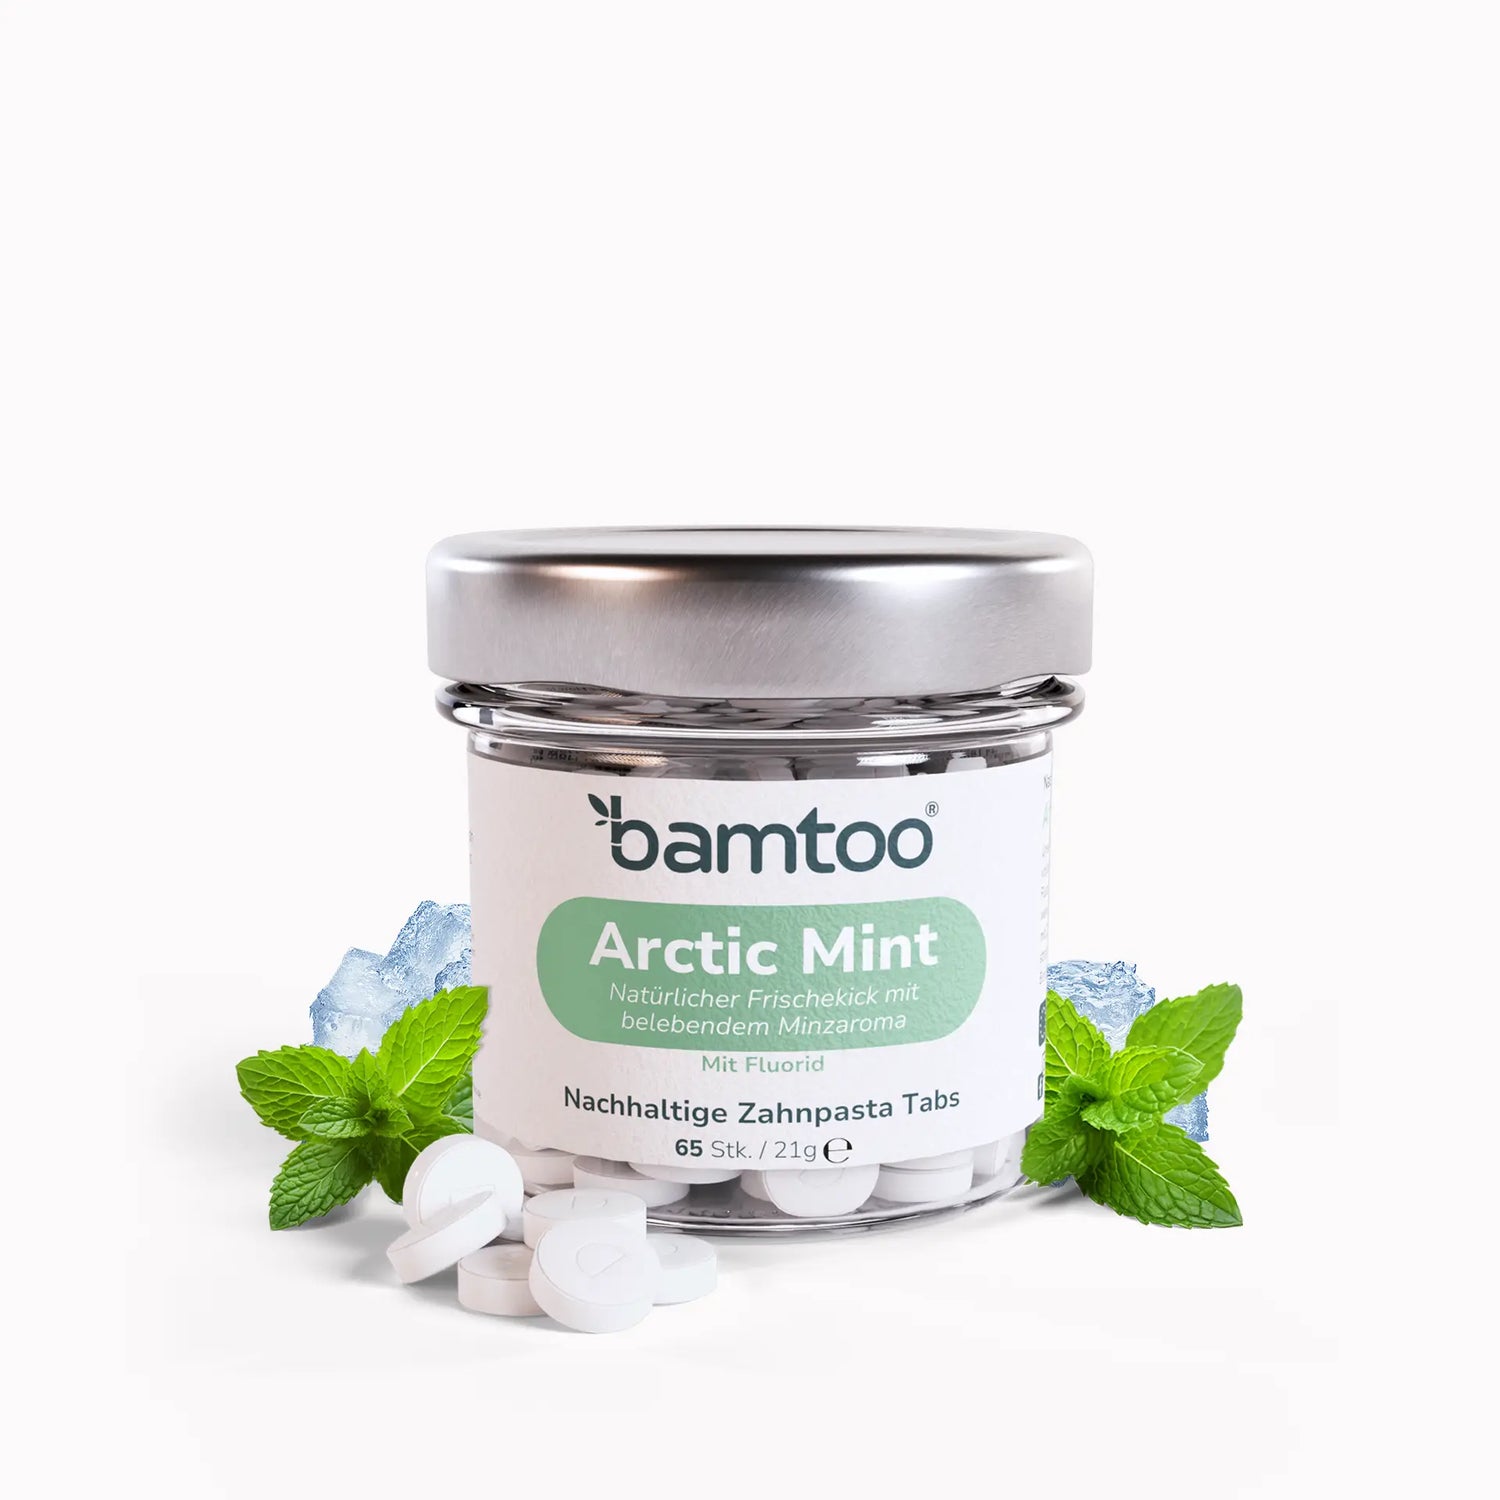 Nachhaltige Zahnpasta Tabs - Arctic Mint